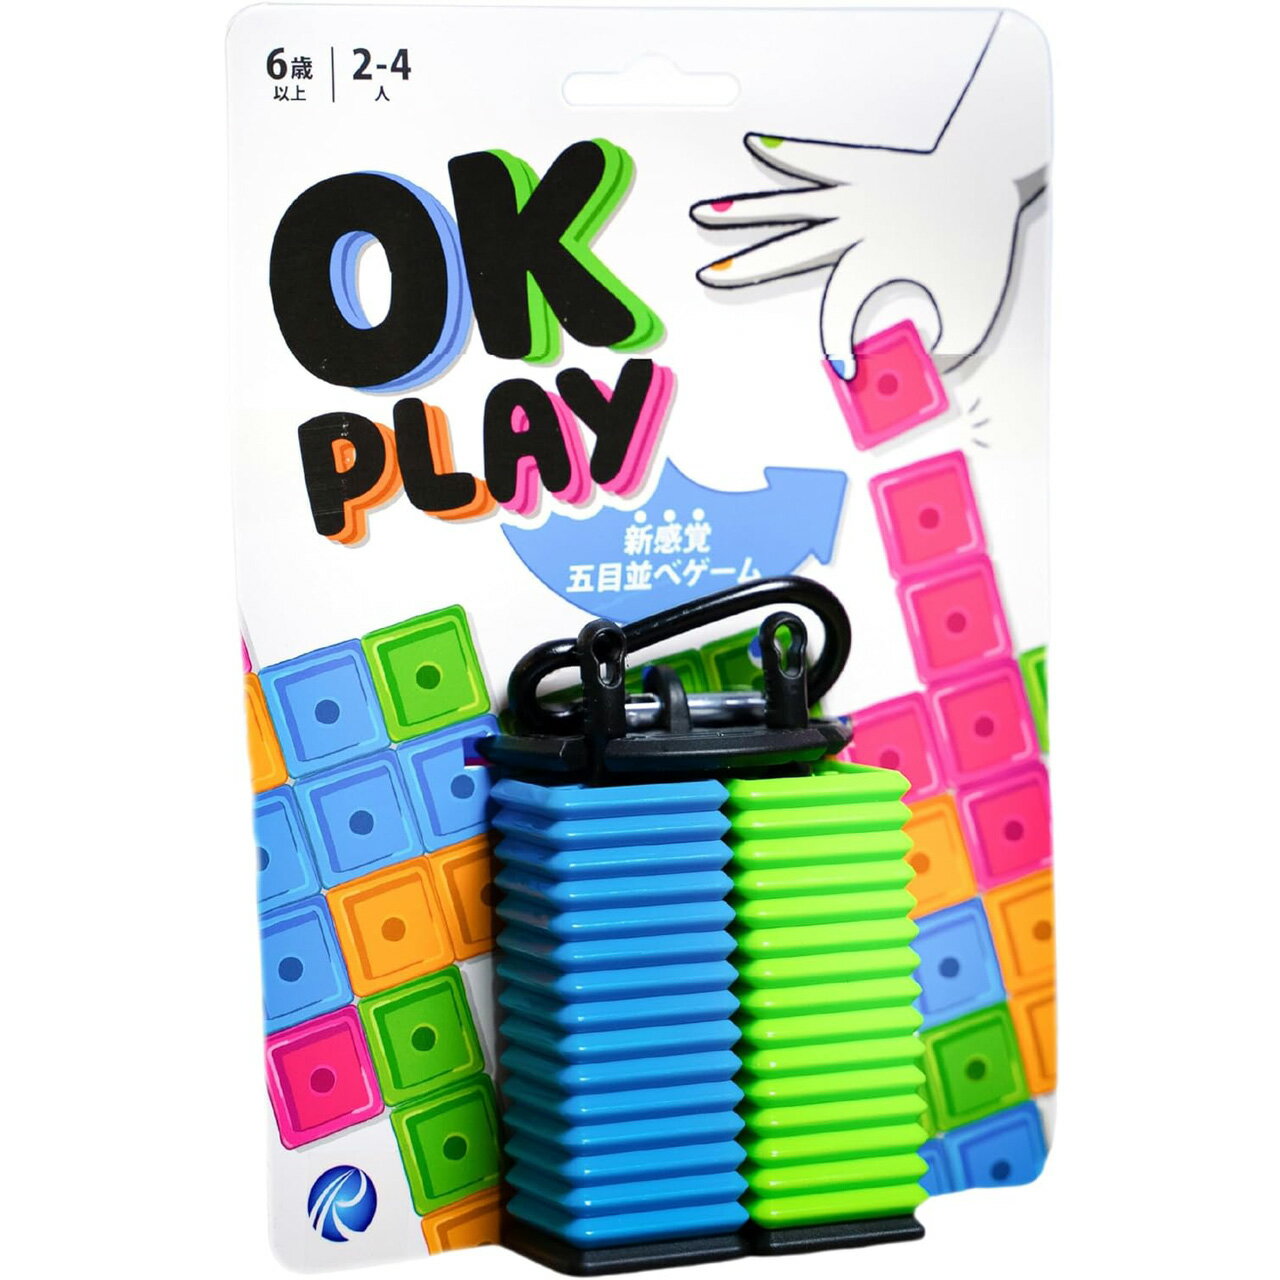 OK PLAY (ボードゲーム カードゲーム) 6歳以上 5-15分程度 2-4人用